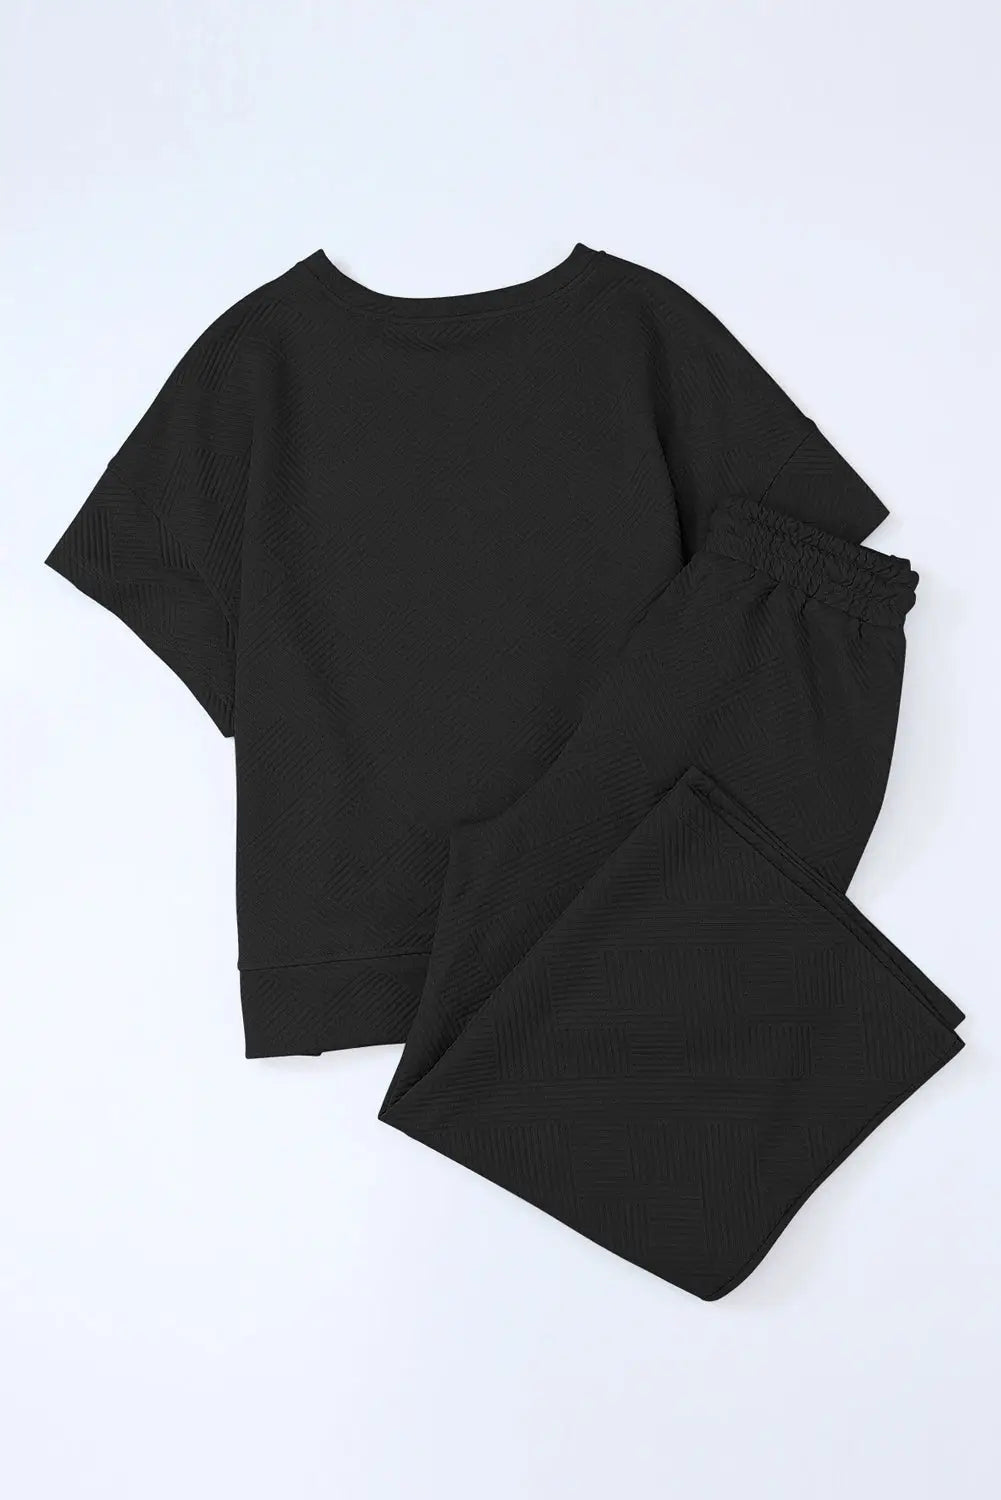 Black textured loose fit t shirt and drawstring pants set - loungewear